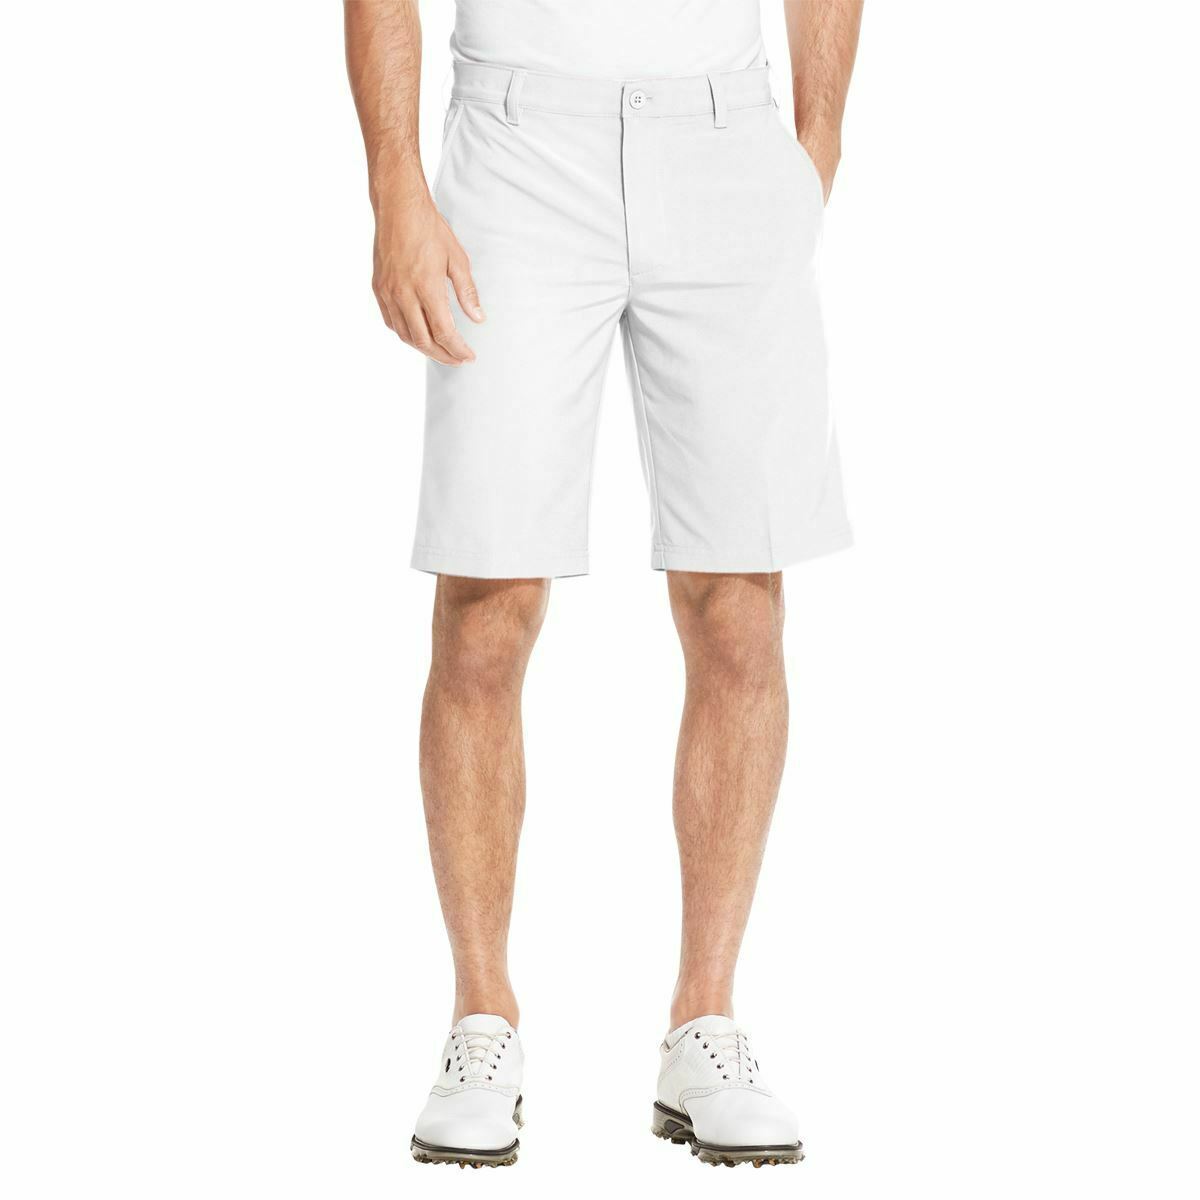 New Izod Golf Men S Performance Classic Fit Shorts Size 44 White Shorts